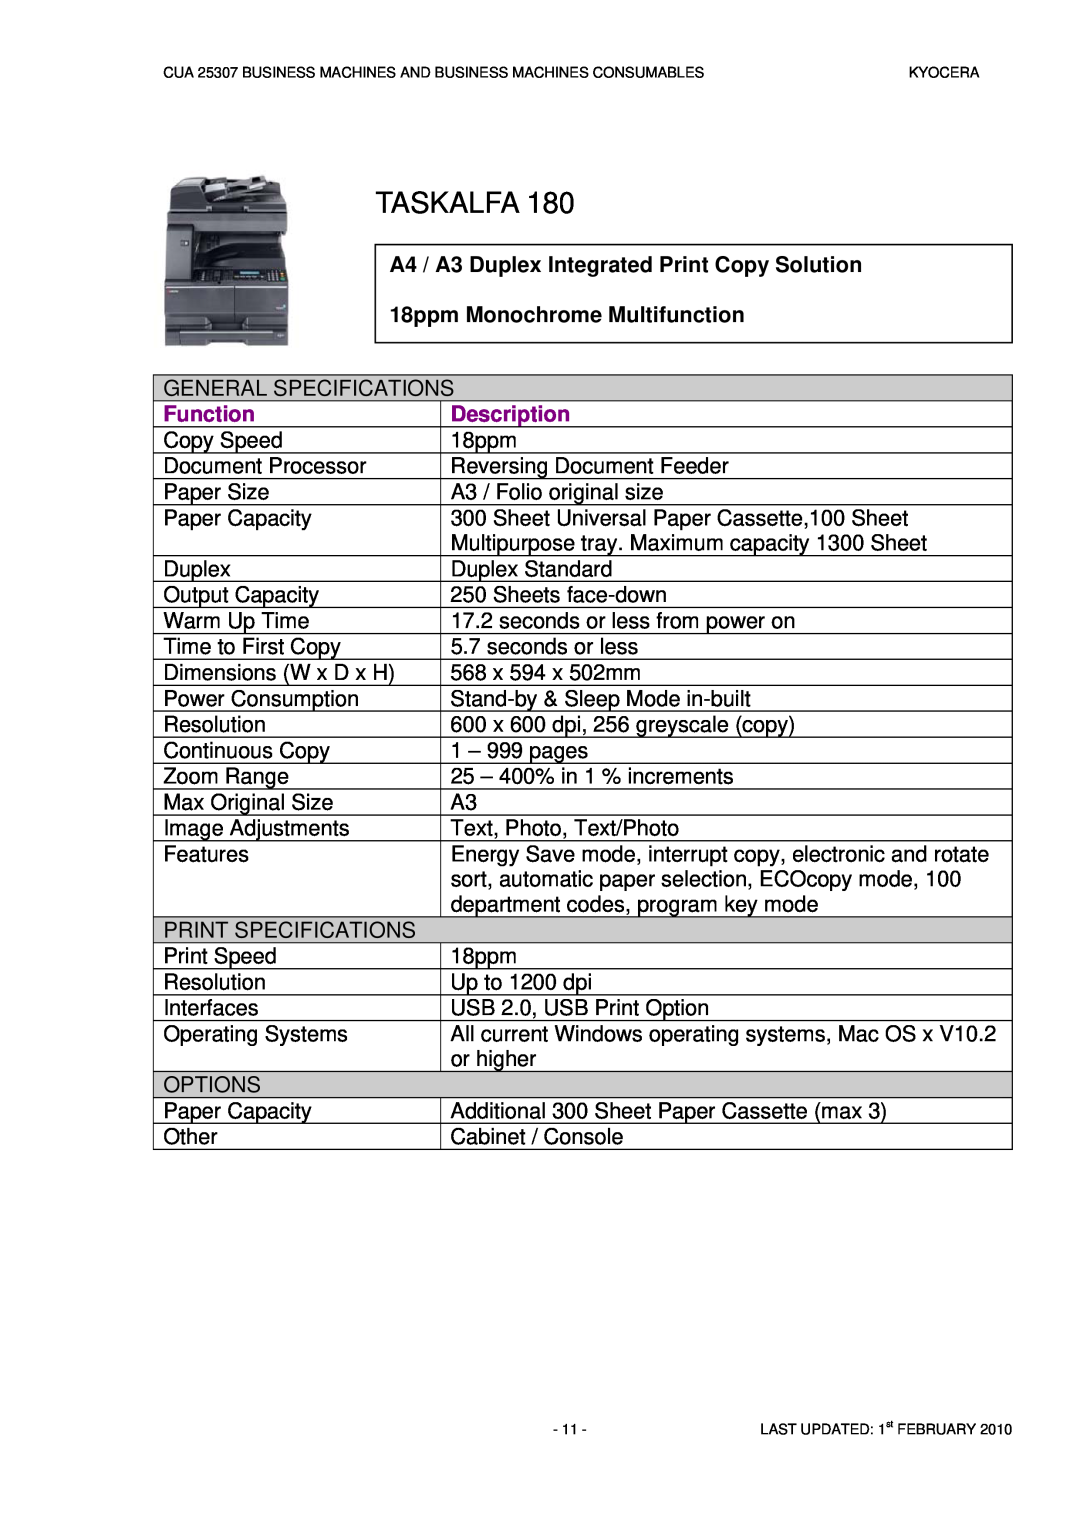 Kyocera CUA 25307 manual Taskalfa, A4 / A3 Duplex Integrated Print Copy Solution, 18ppm Monochrome Multifunction, Function 